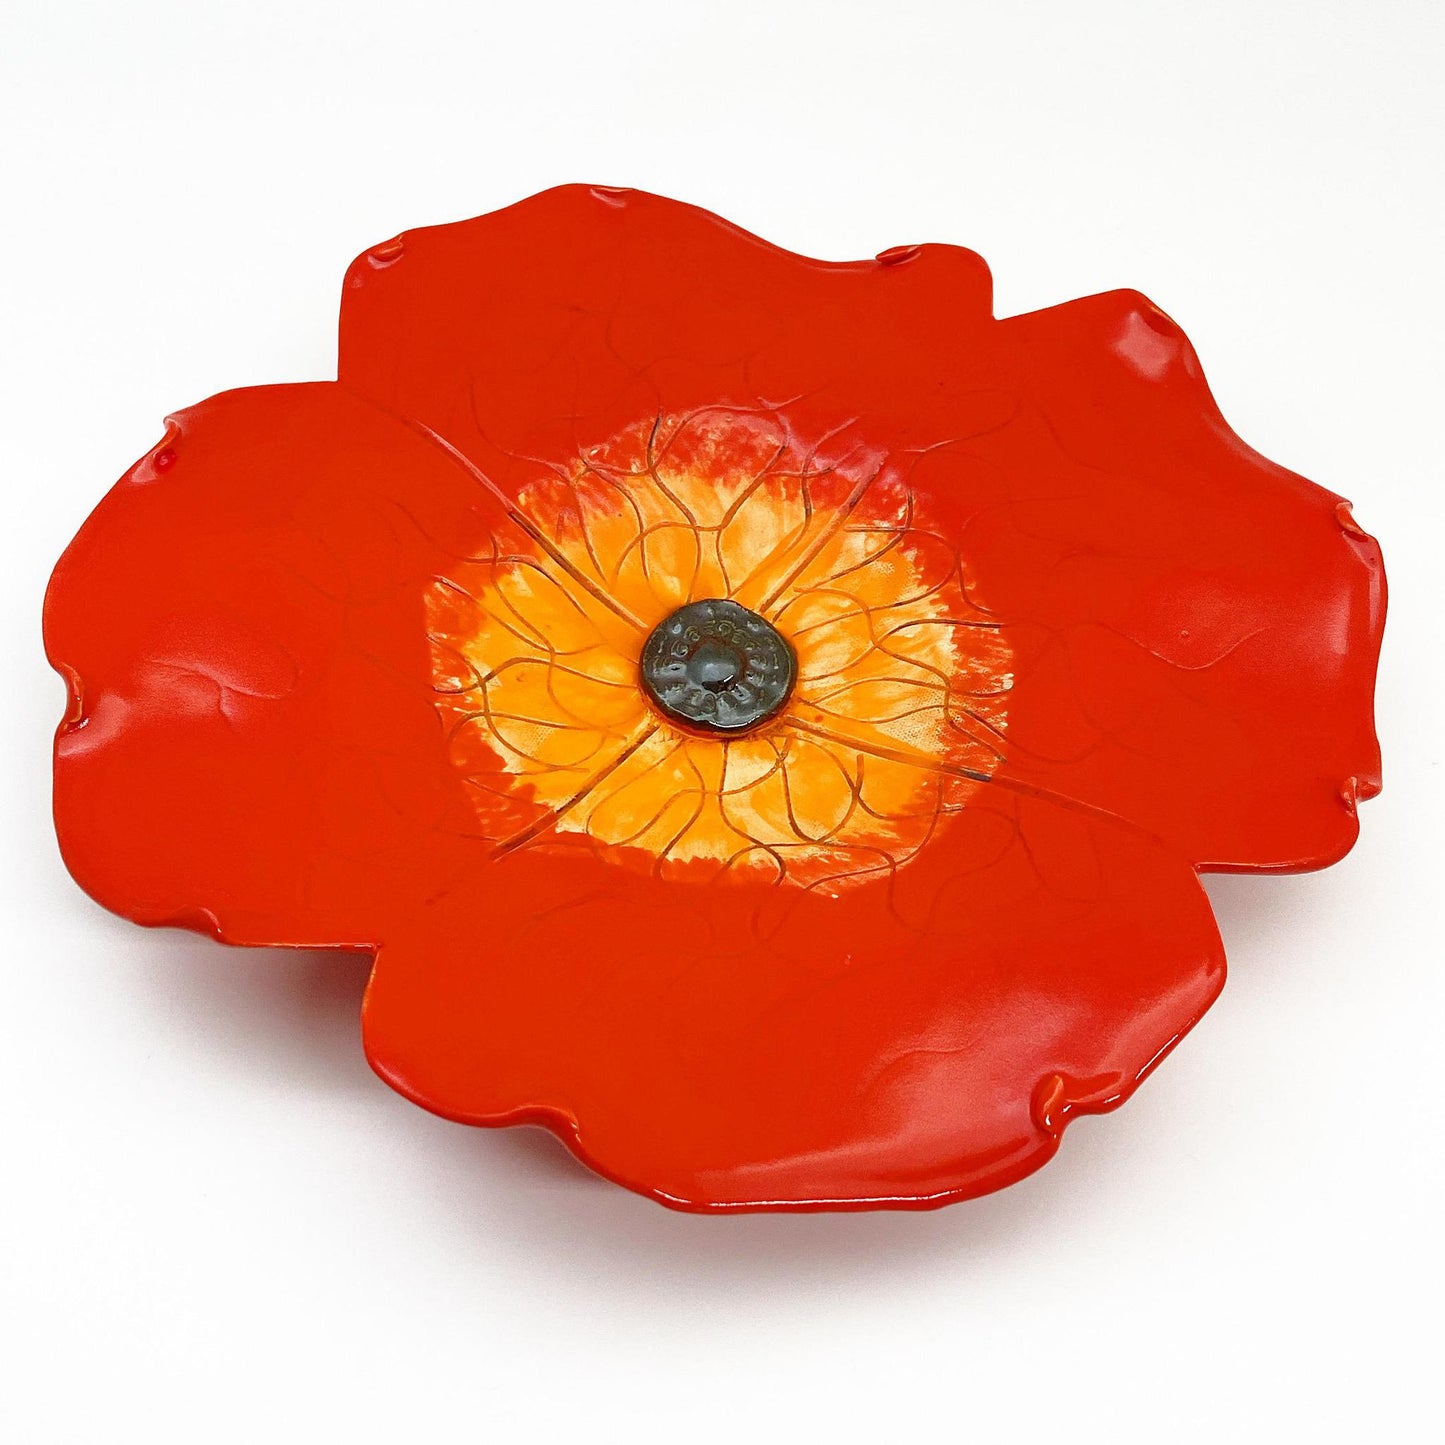 Ceramic Wall Art - Orange/Red Poppy Flower - Medium